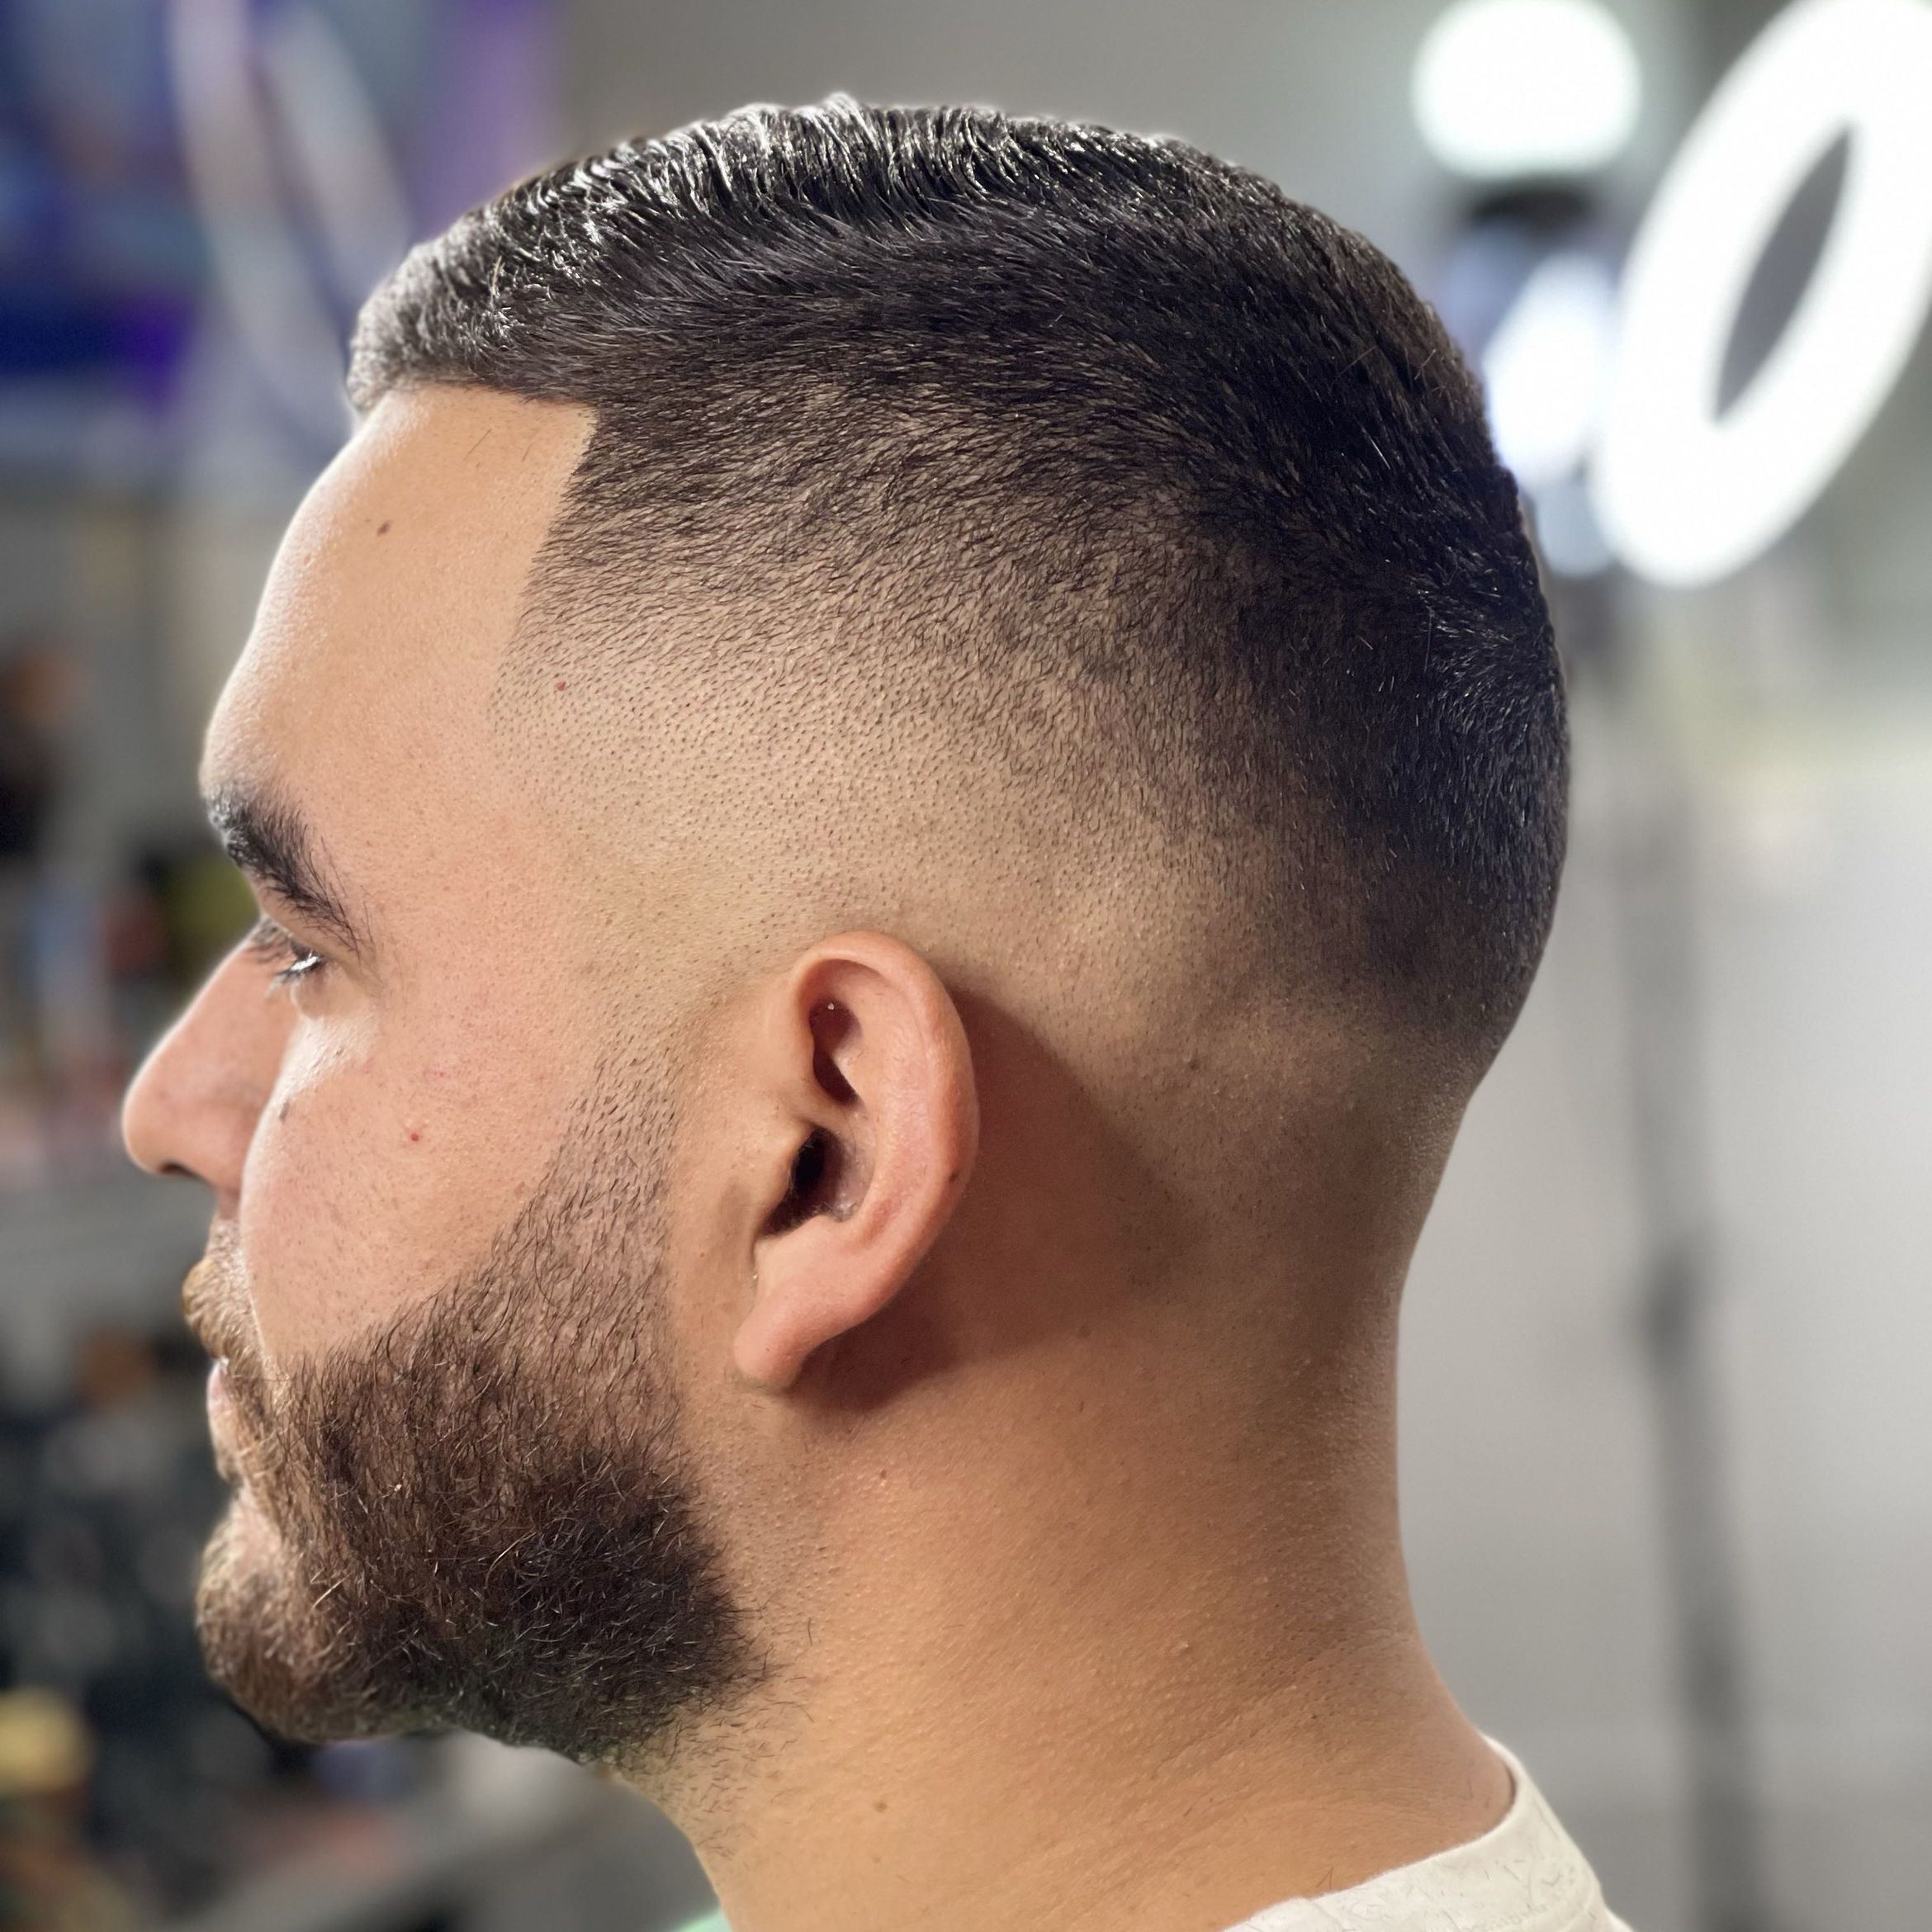 Haircut / beard - Corte / barba portfolio